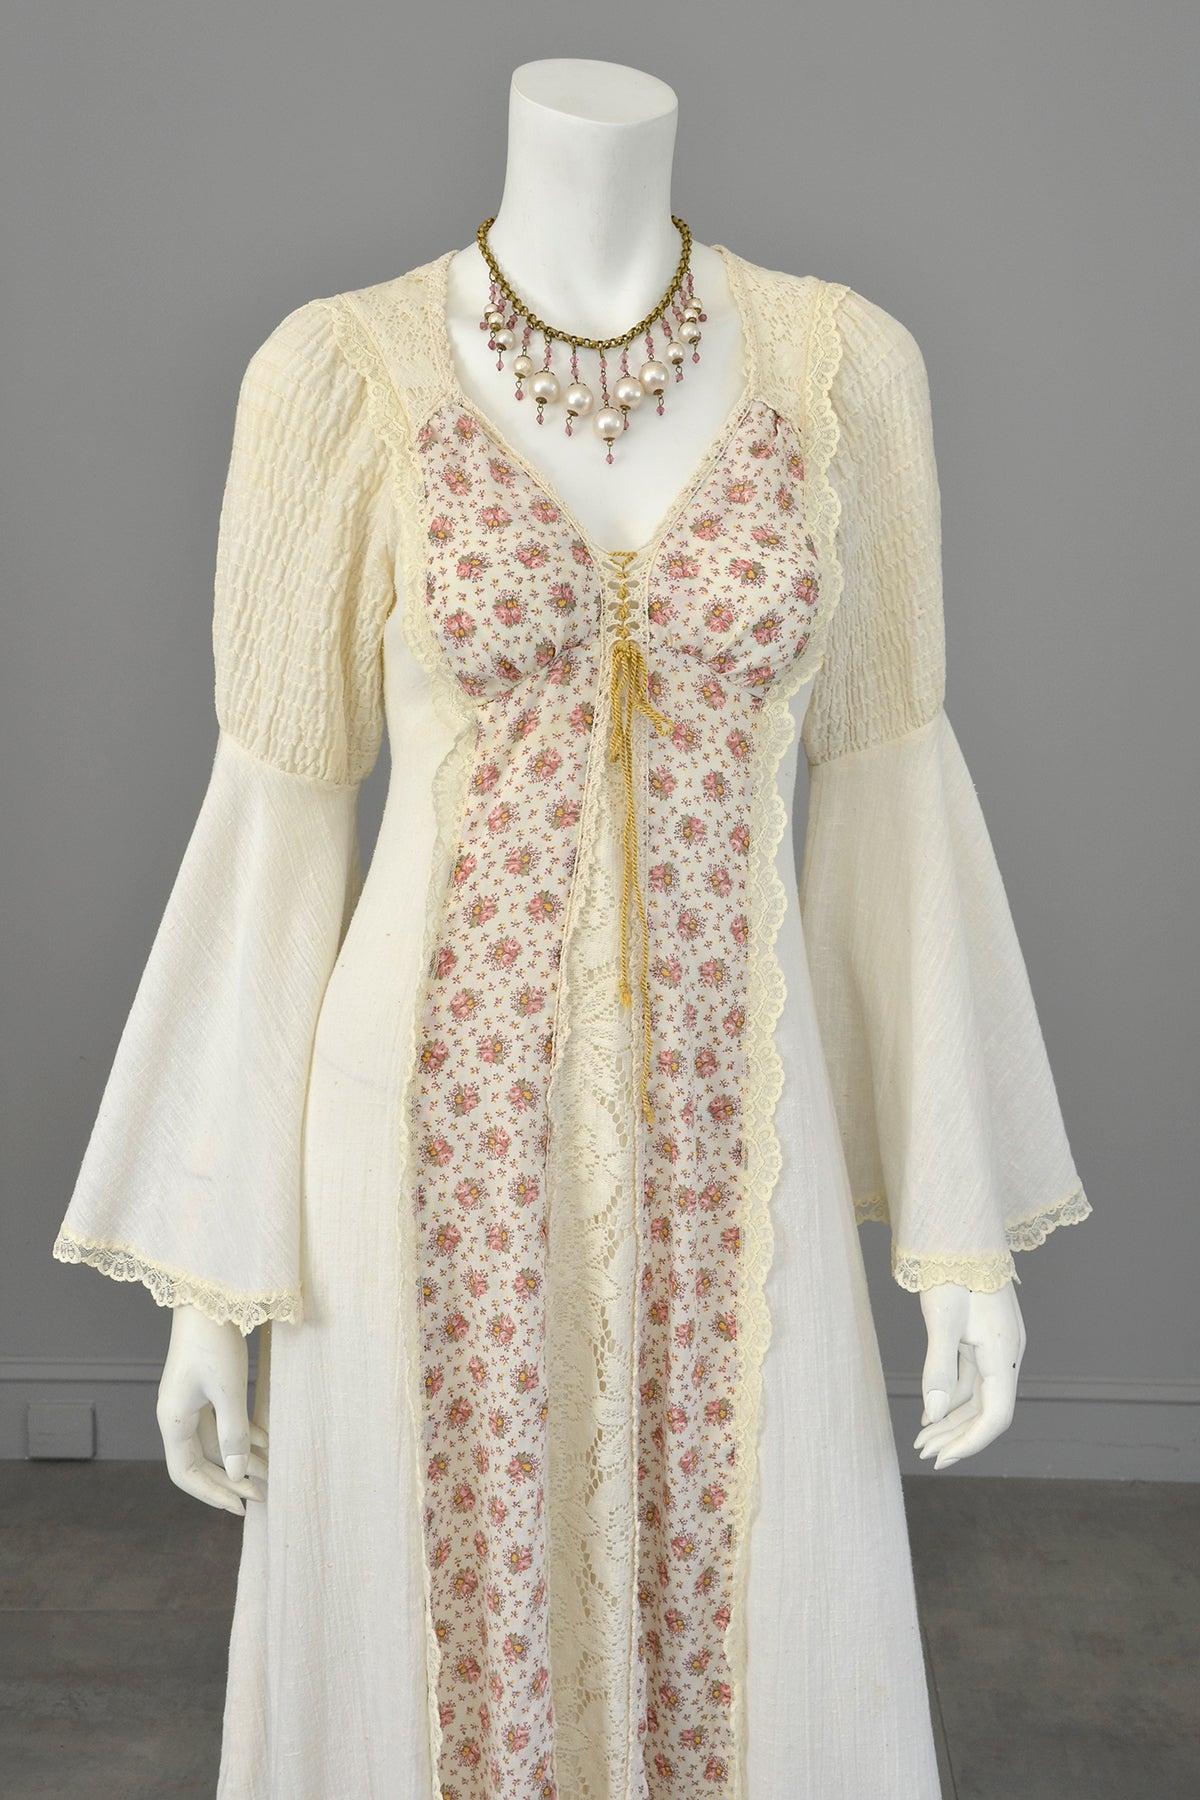 1970s Vintage Renaissance Victorian Revival Peasant Prairie Dress by Jody T | Romantic Hippie Dress w Poet Bell Sleeves | 70s Woodland Fairy Dress